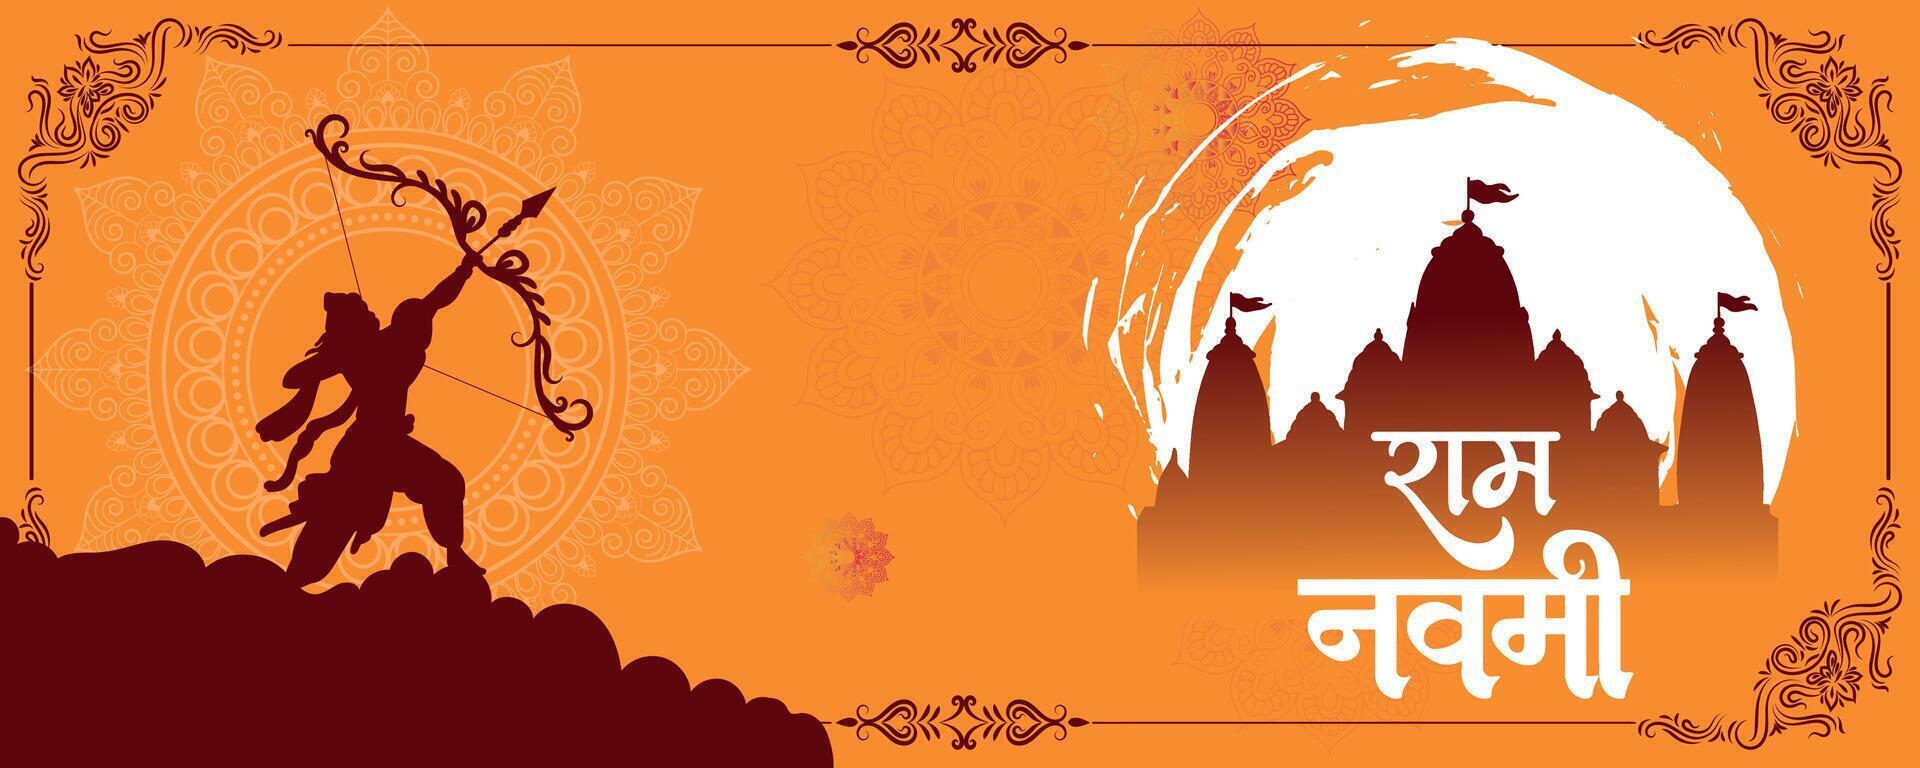 contento RAM navami cultural bandera hindú festival vertical enviar deseos celebracion tarjeta RAM navami celebracion antecedentes y RAM navami saludos amarillo beige antecedentes vector